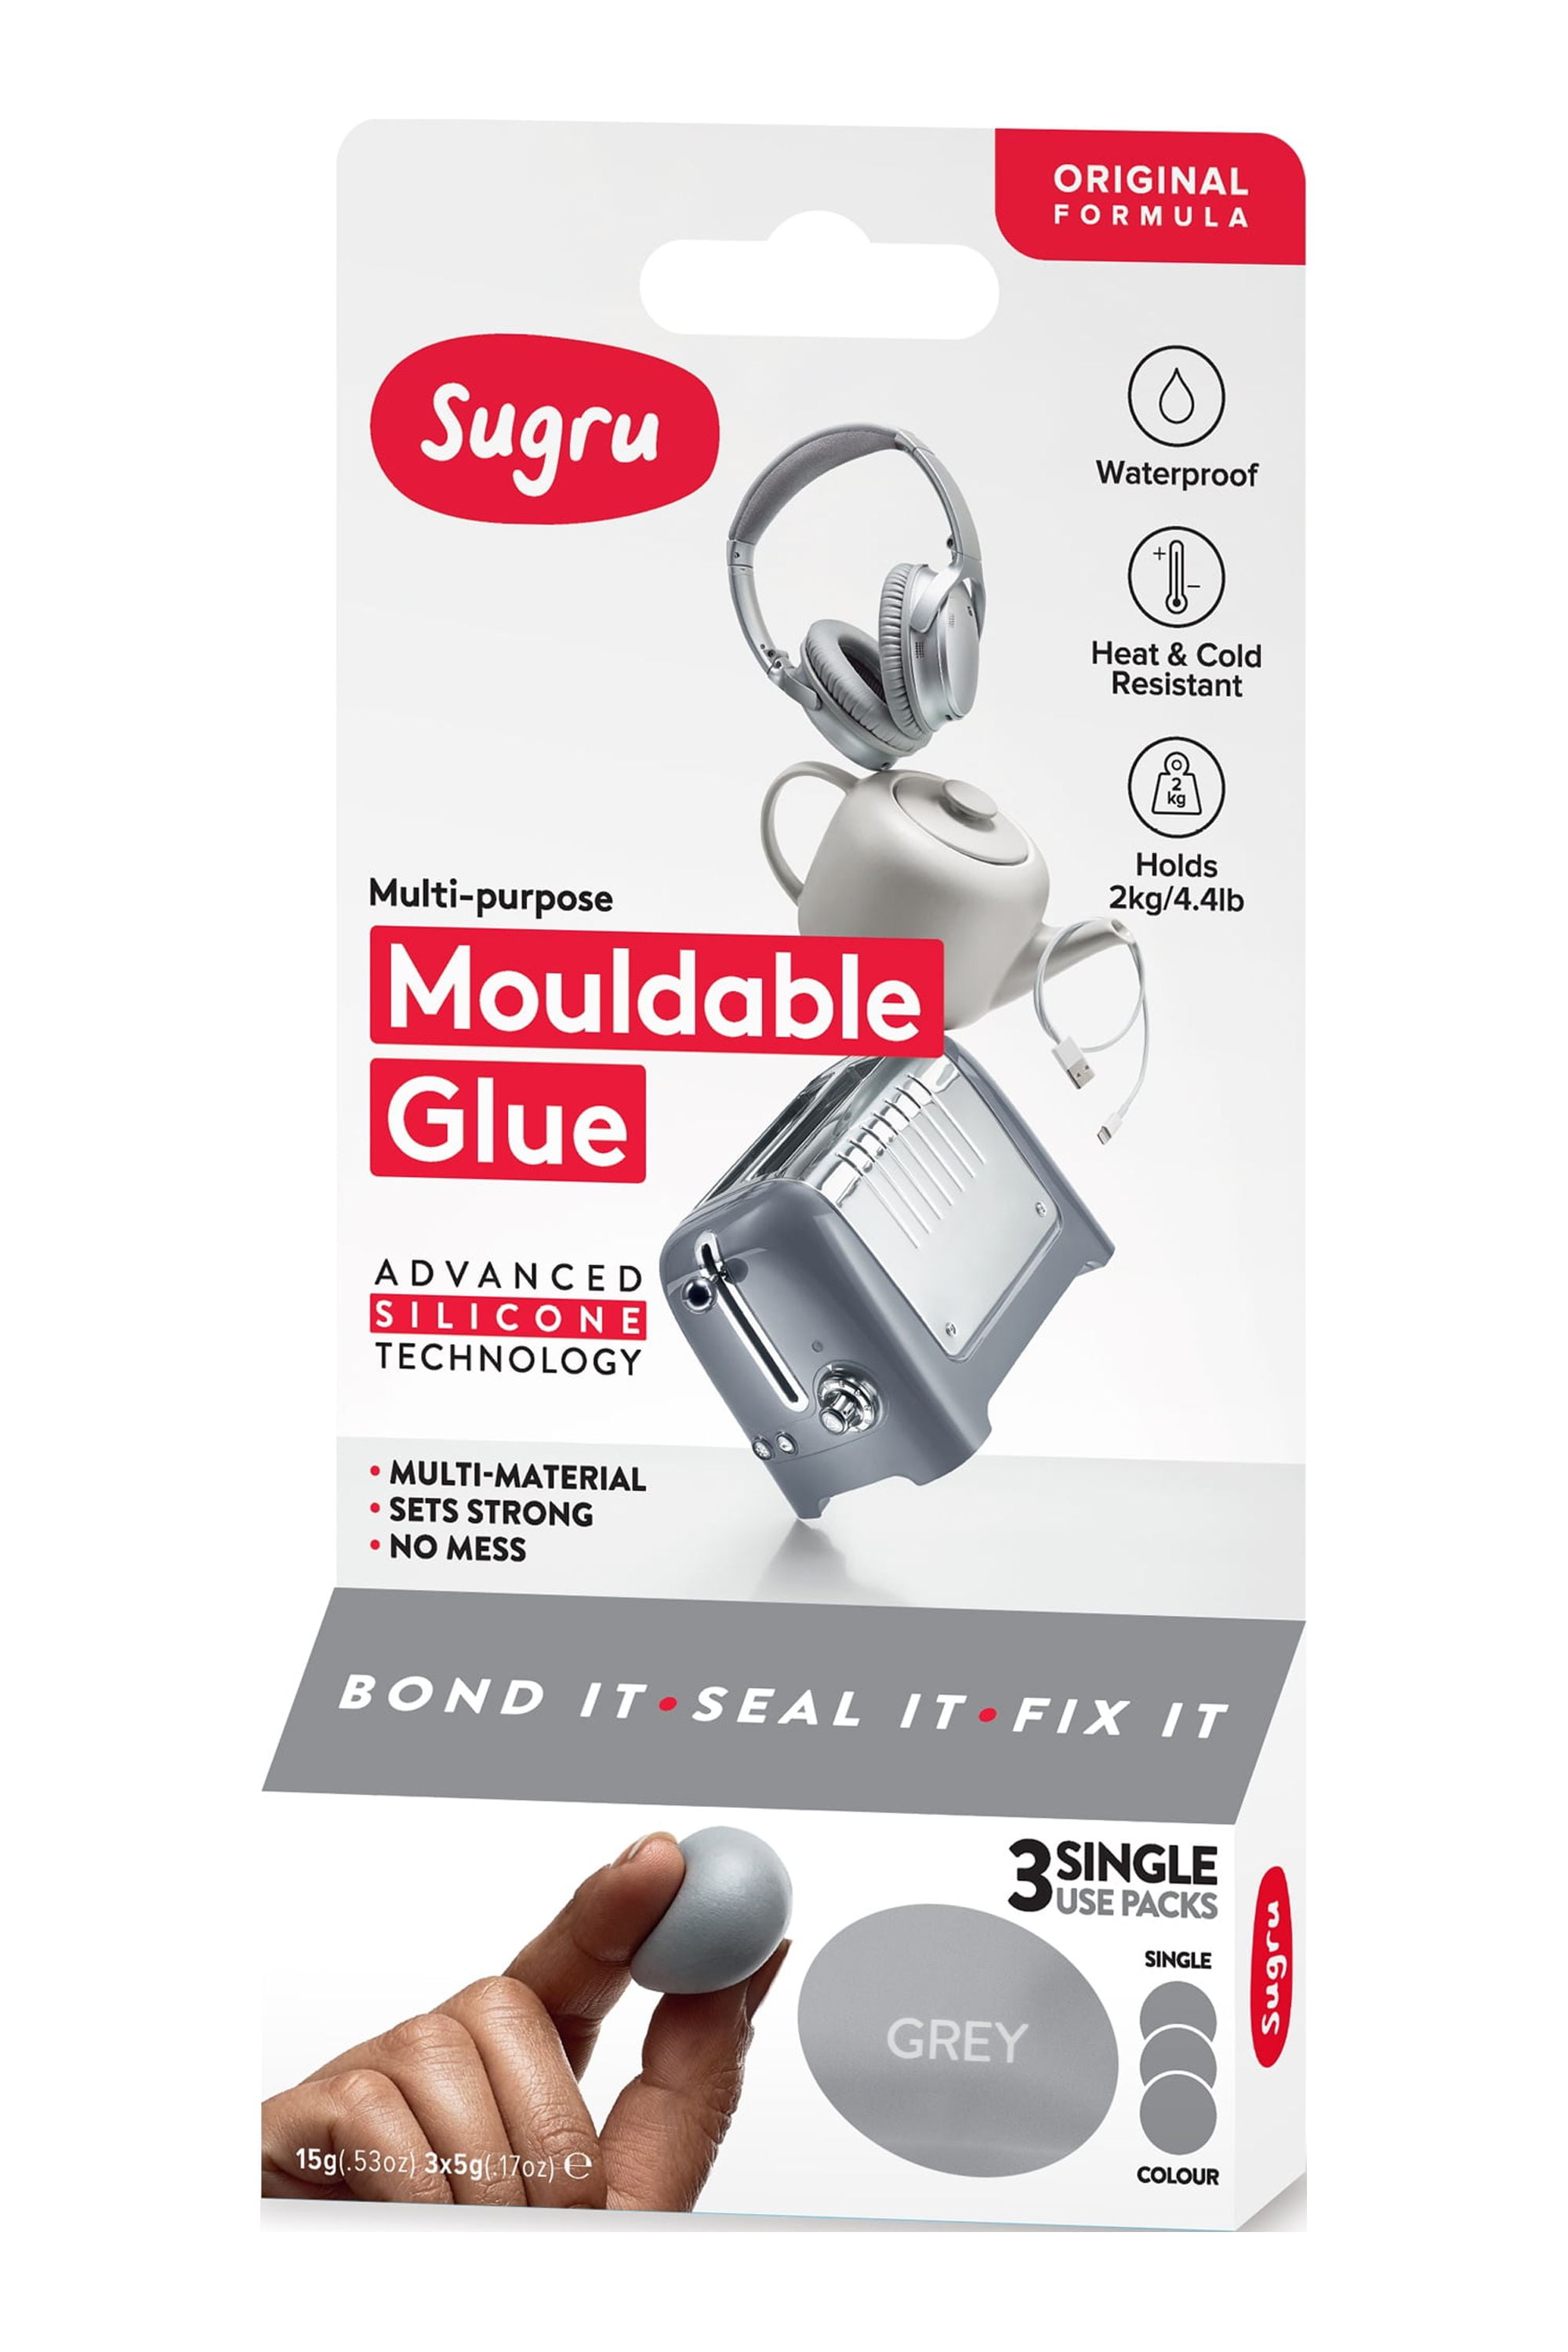 Sugru Moldable Glue - Original Formula - Black, Jordan